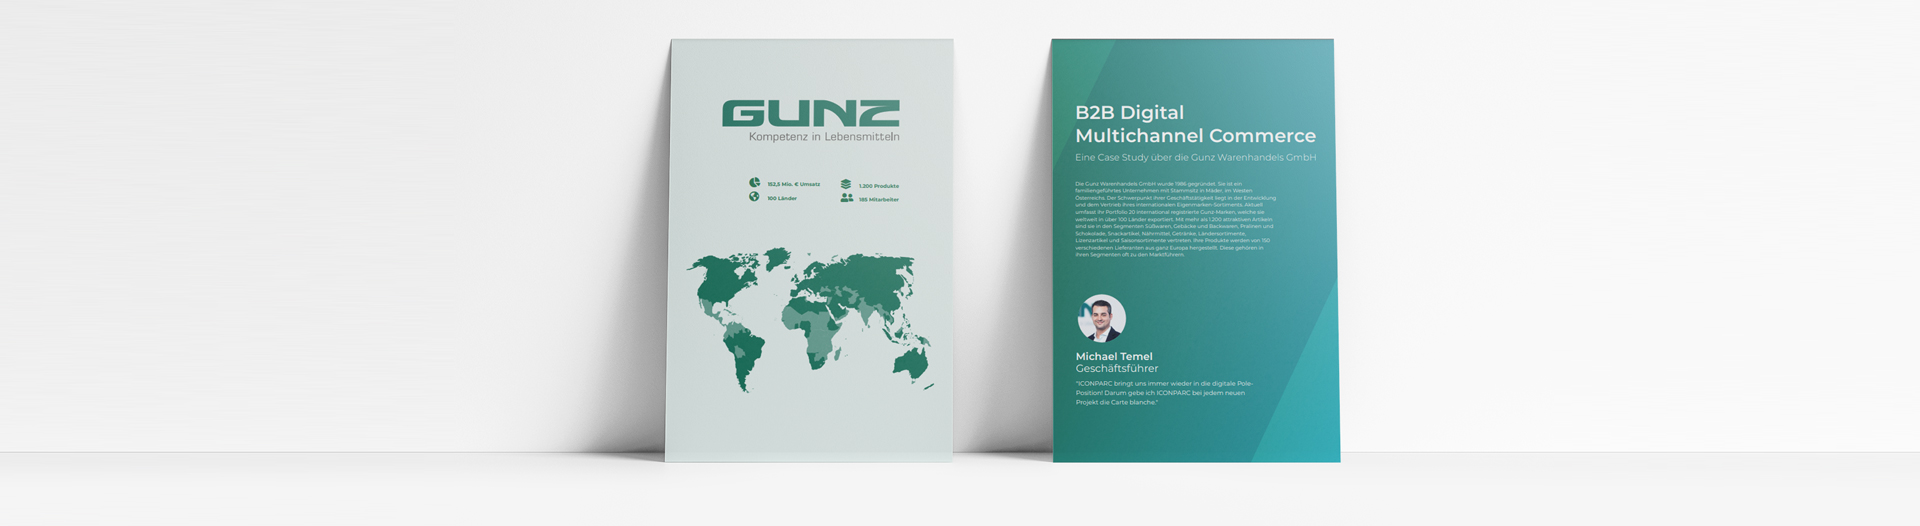 Case Study GUNZ B2B Digital Multichannel Commerce